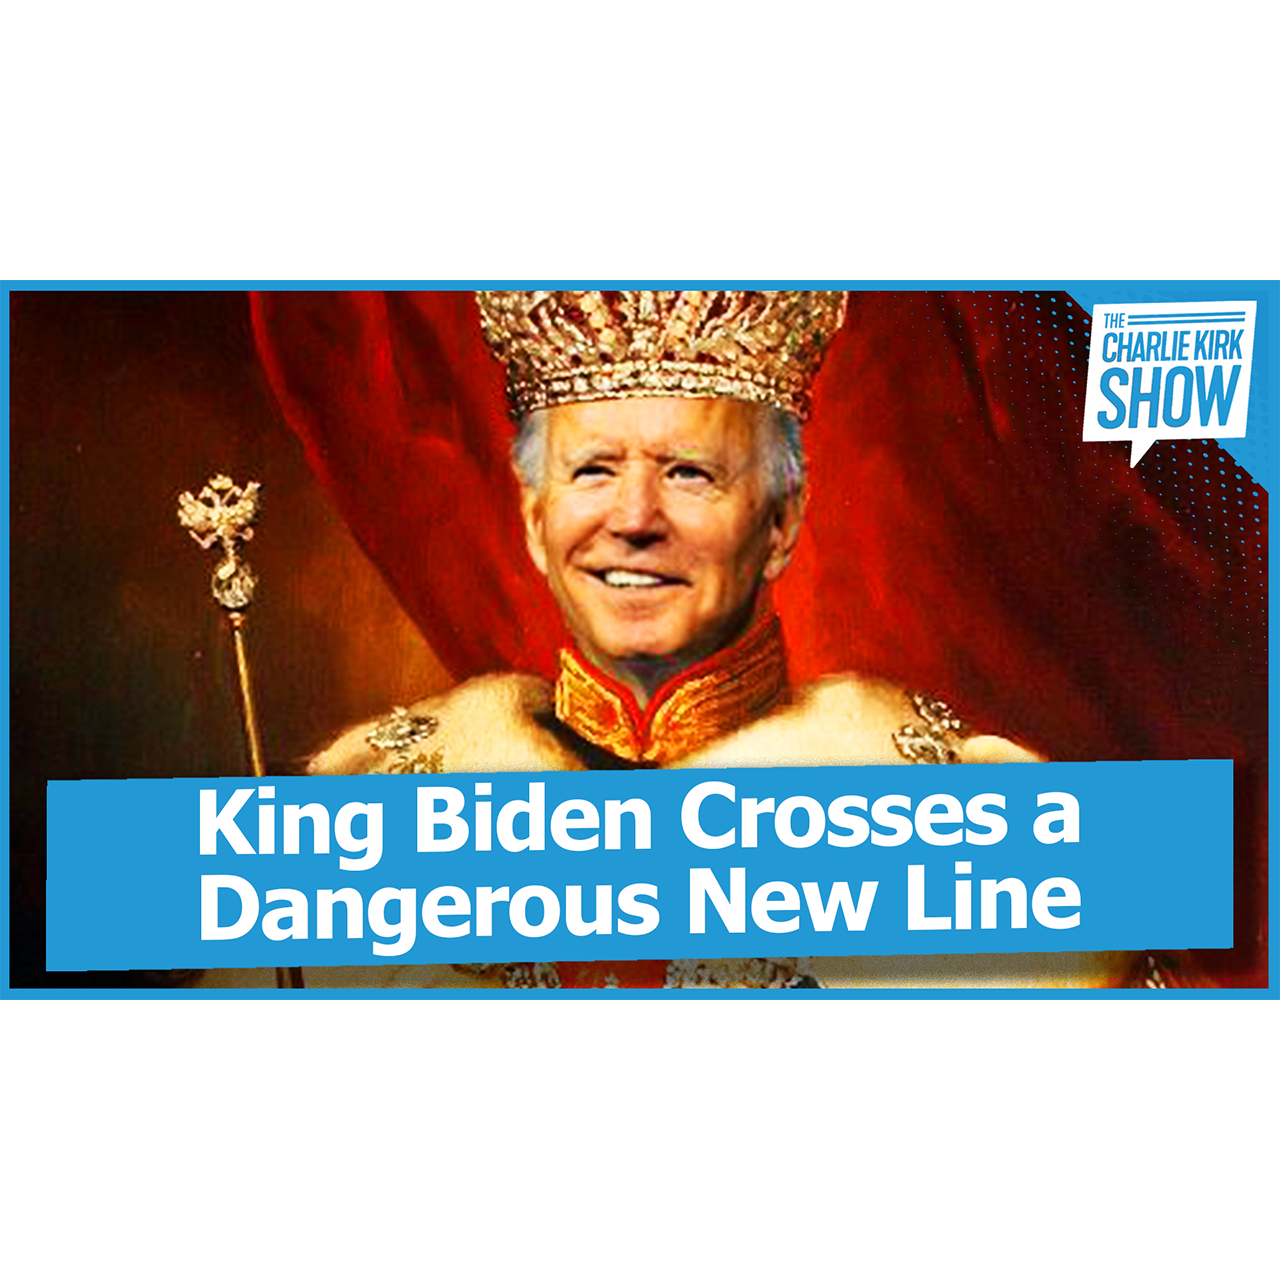 King Biden Crosses a Dangerous New Line